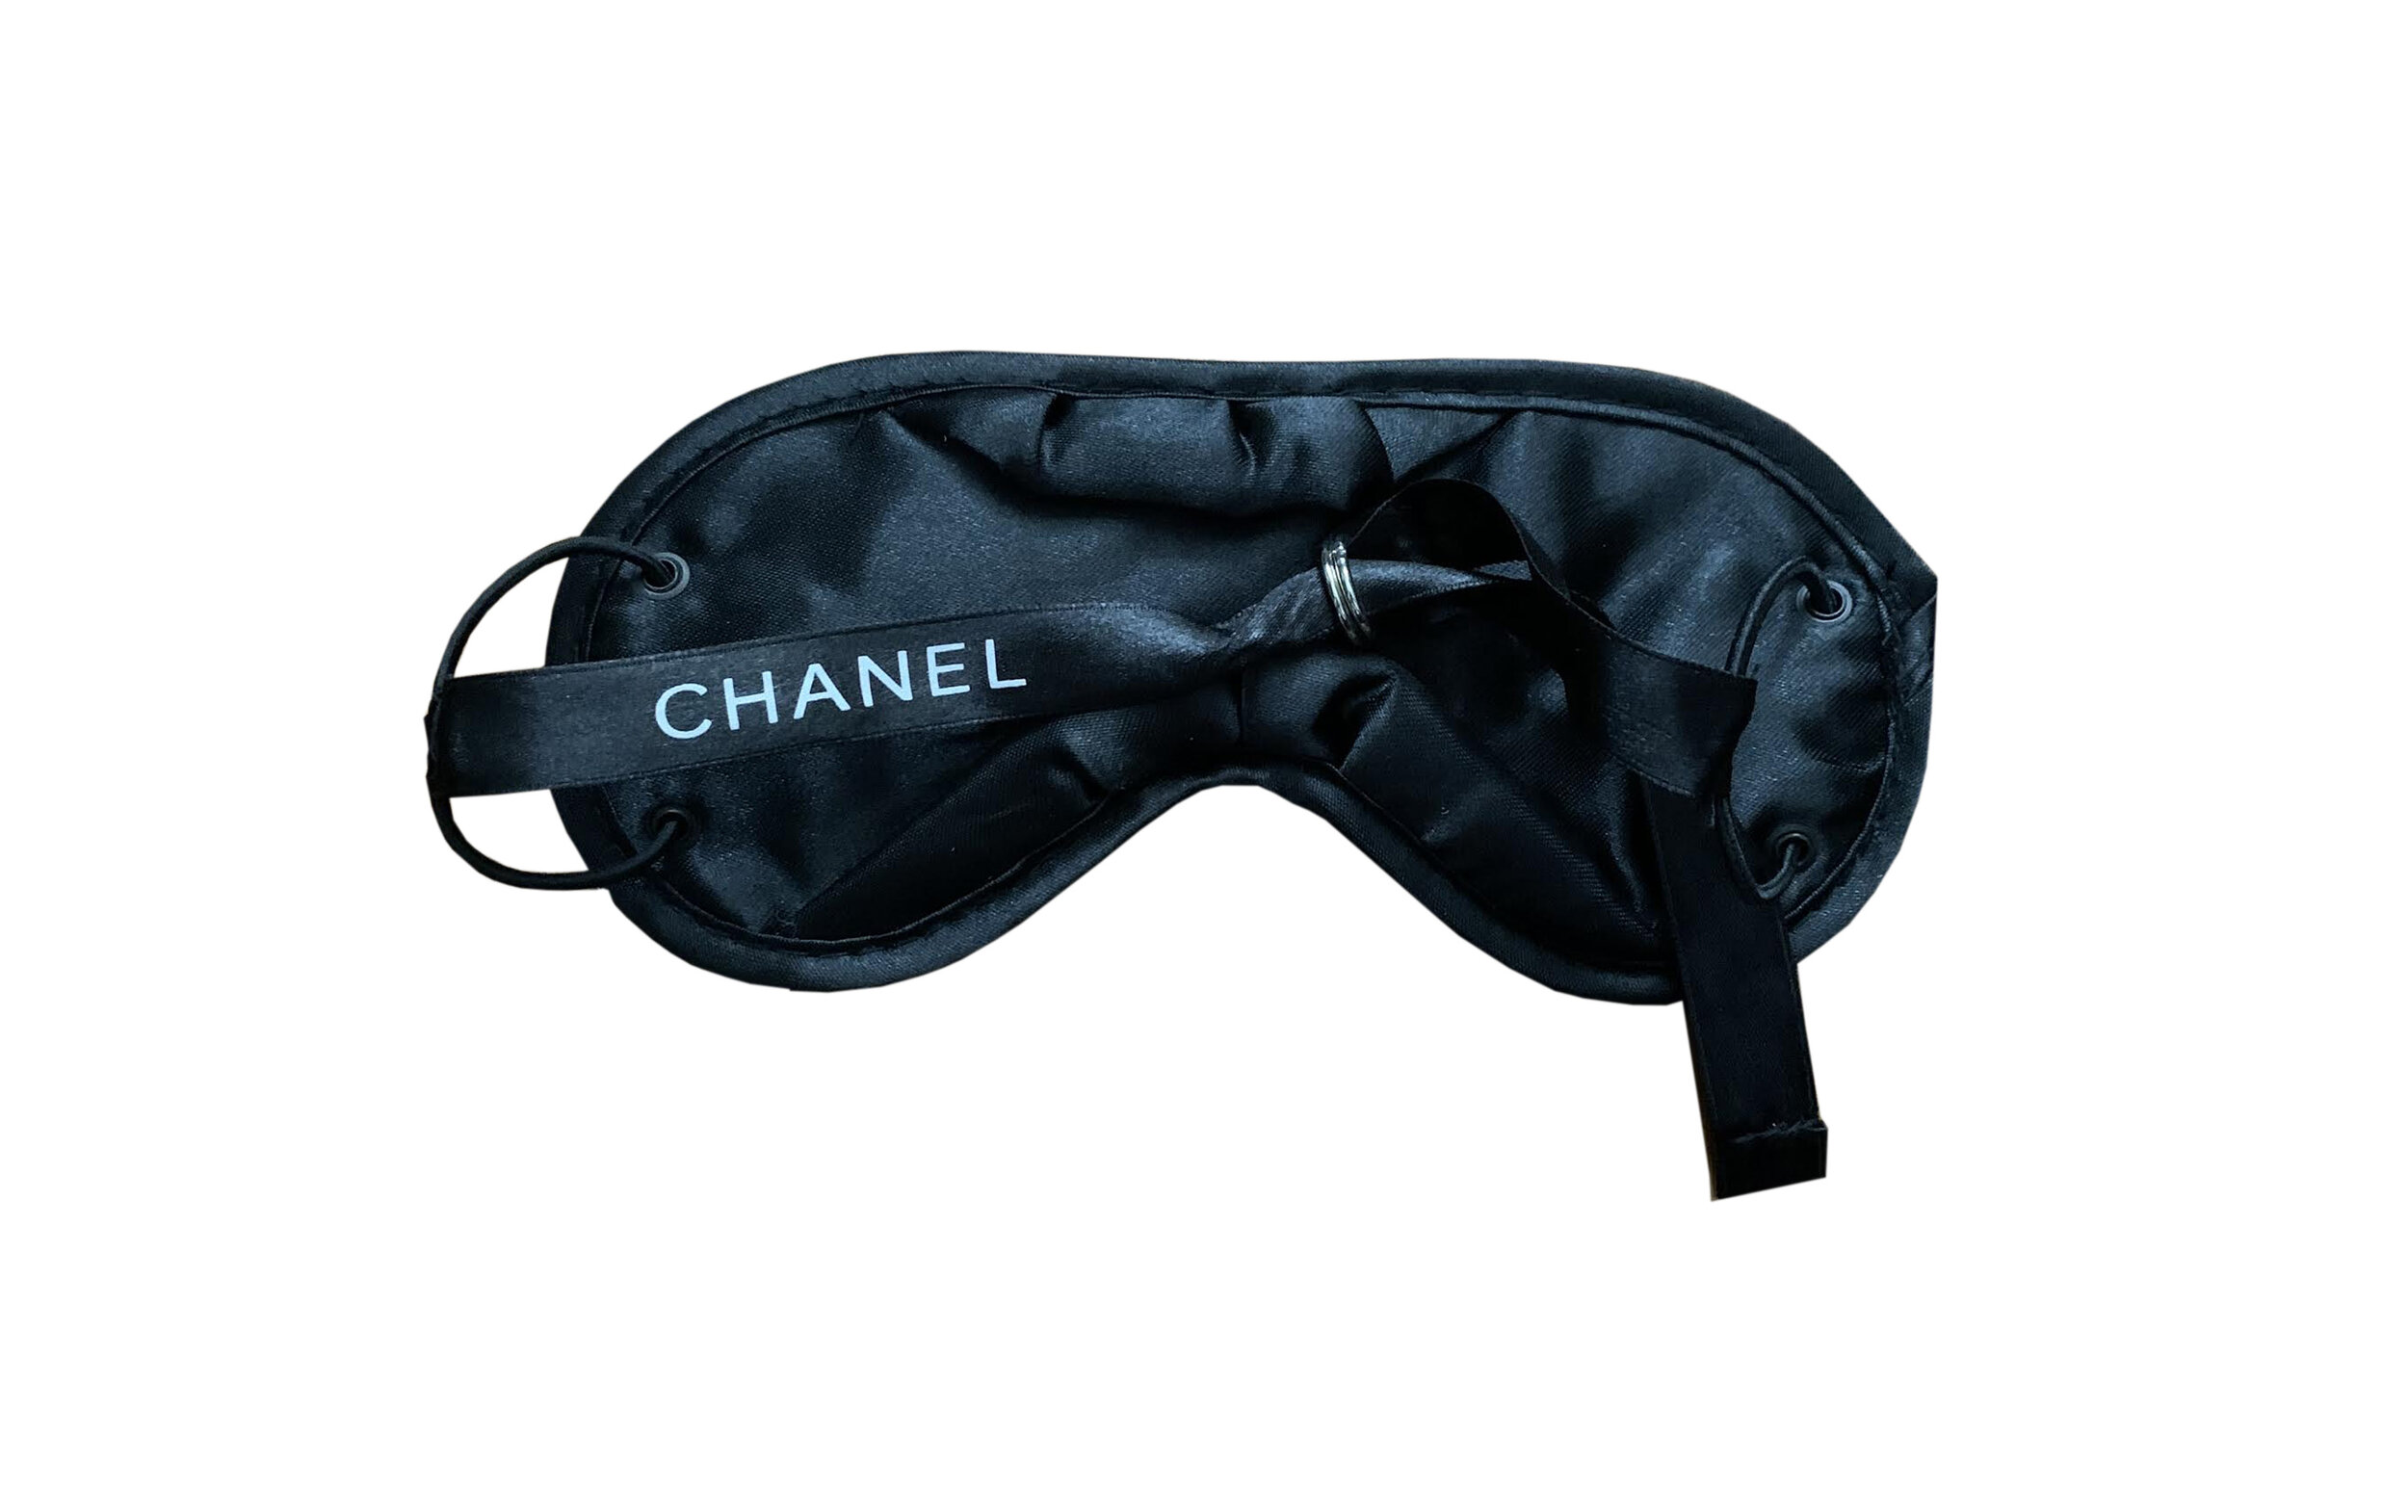 Spitze Chanel Beauty Sleep Masks Genuine Travel Mask Relax Eye